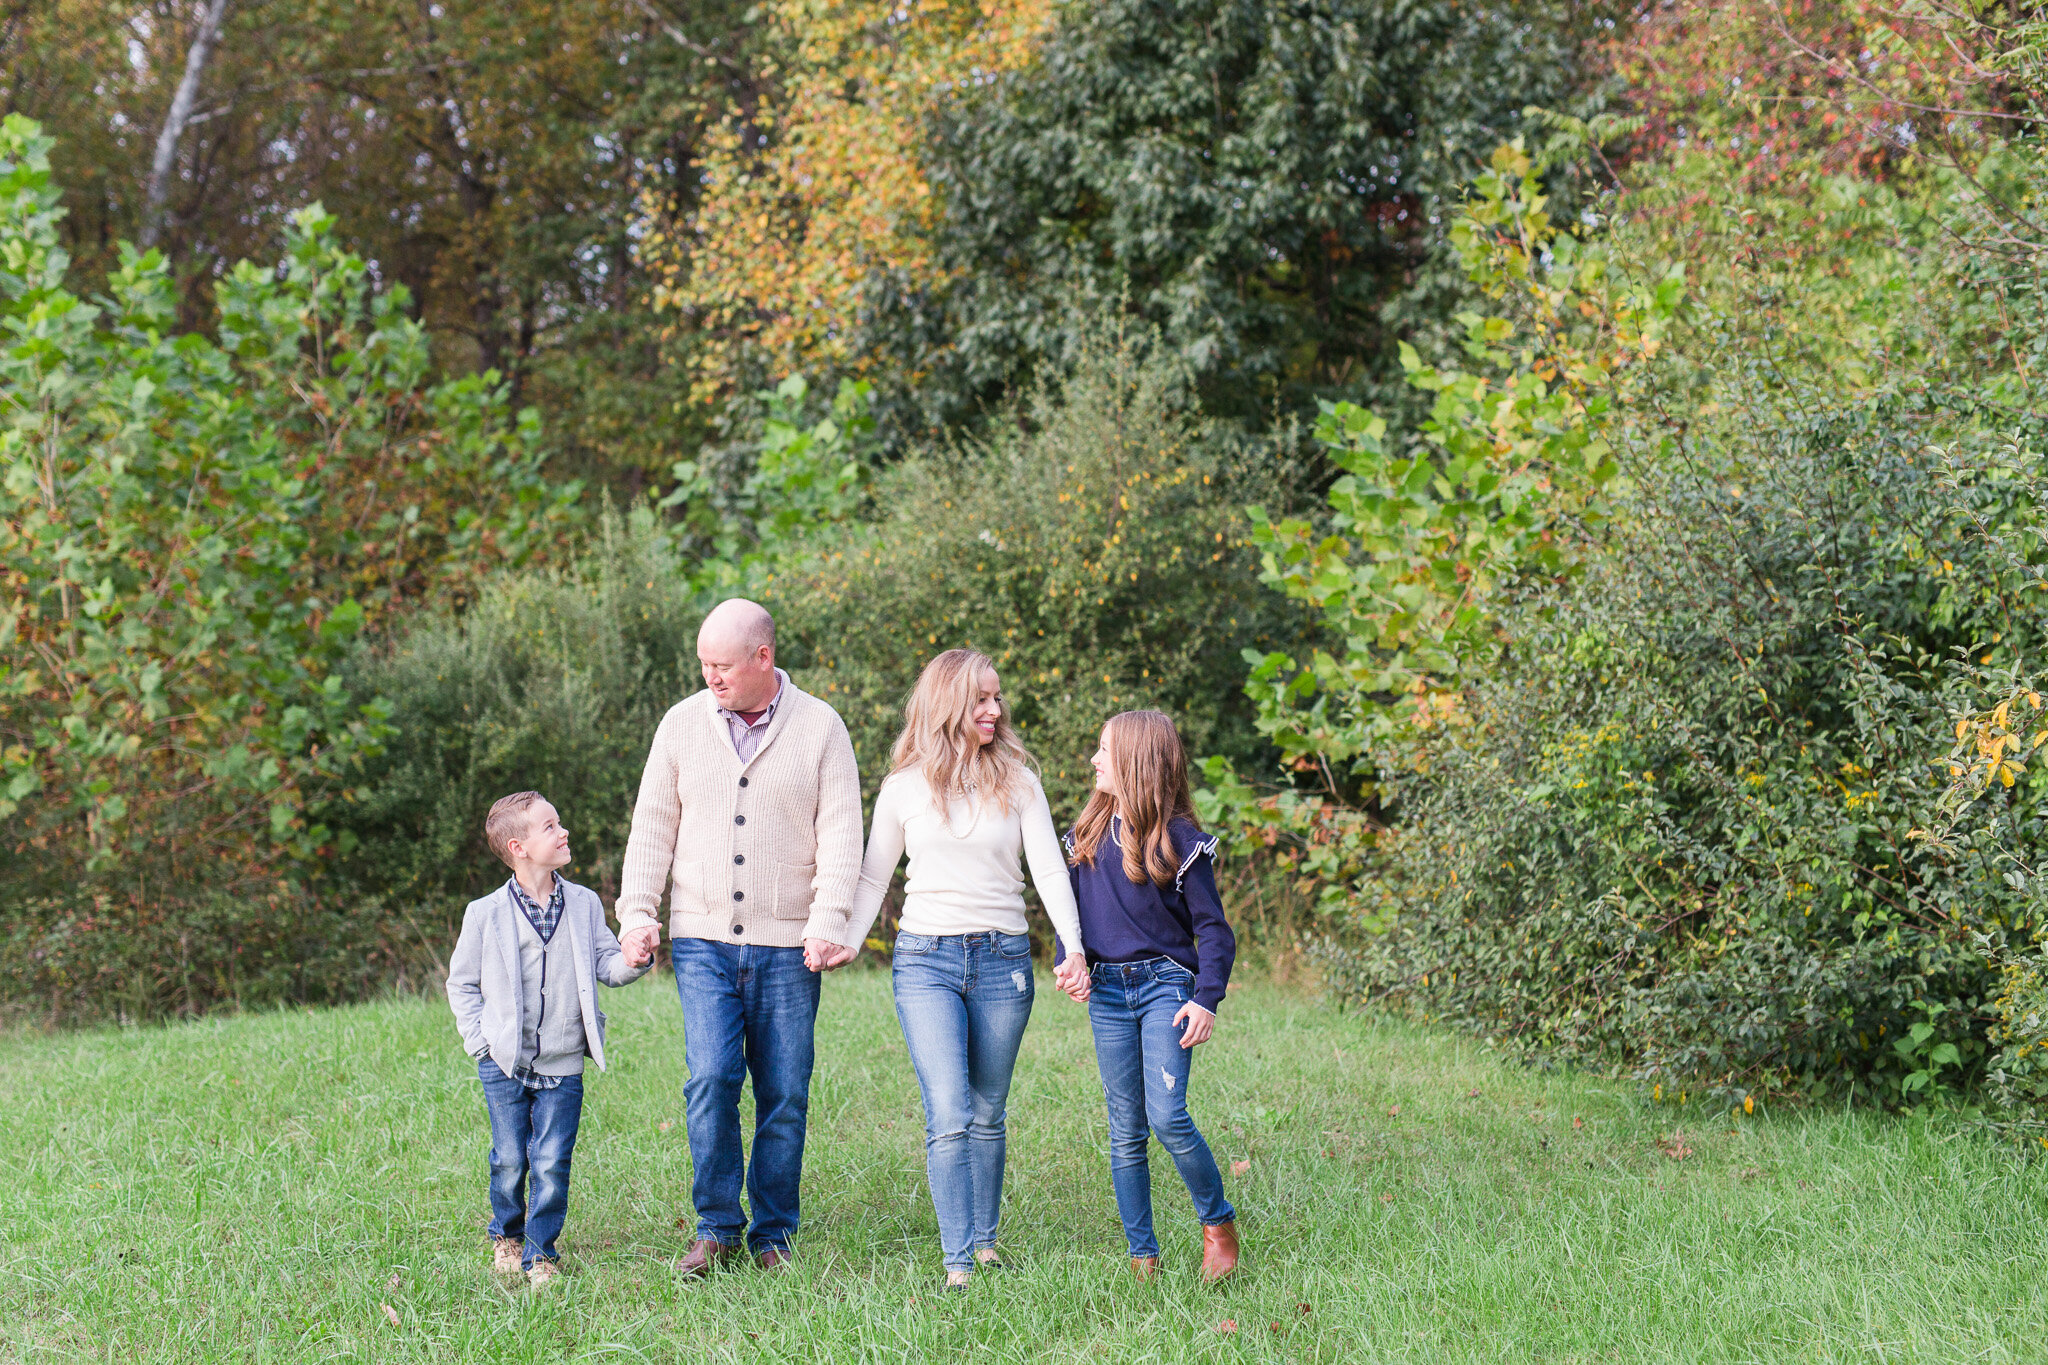 Fall Family Photos in Central Virginia || Lynchurg, Virginia Family Photographer || Ivy Creek Park in Lynchburg || Ashley Eiban Photography 